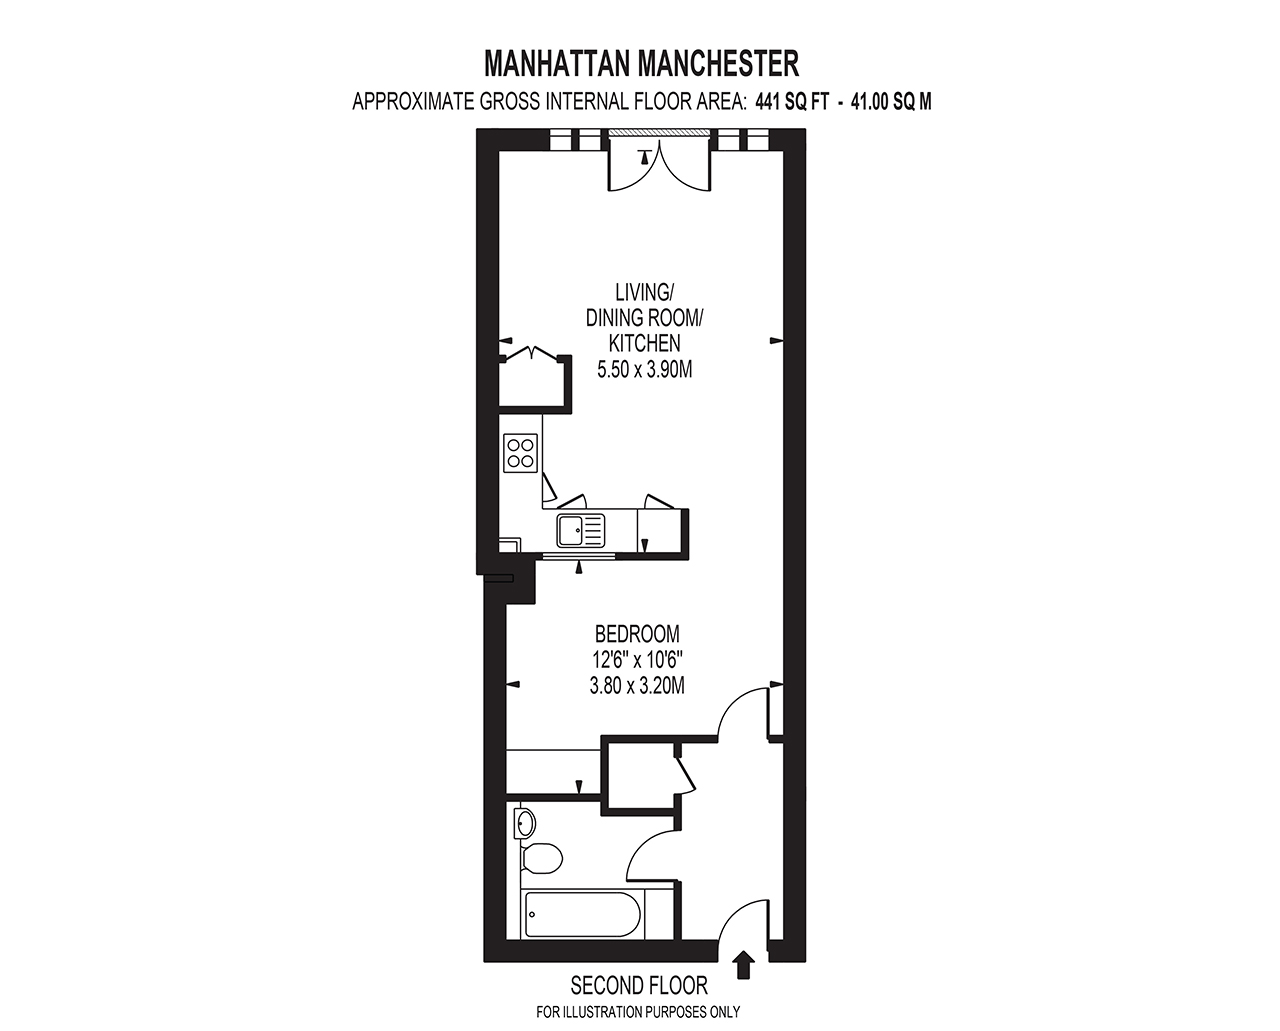 Manhattan Manchester floor plan one bedroom apartment 